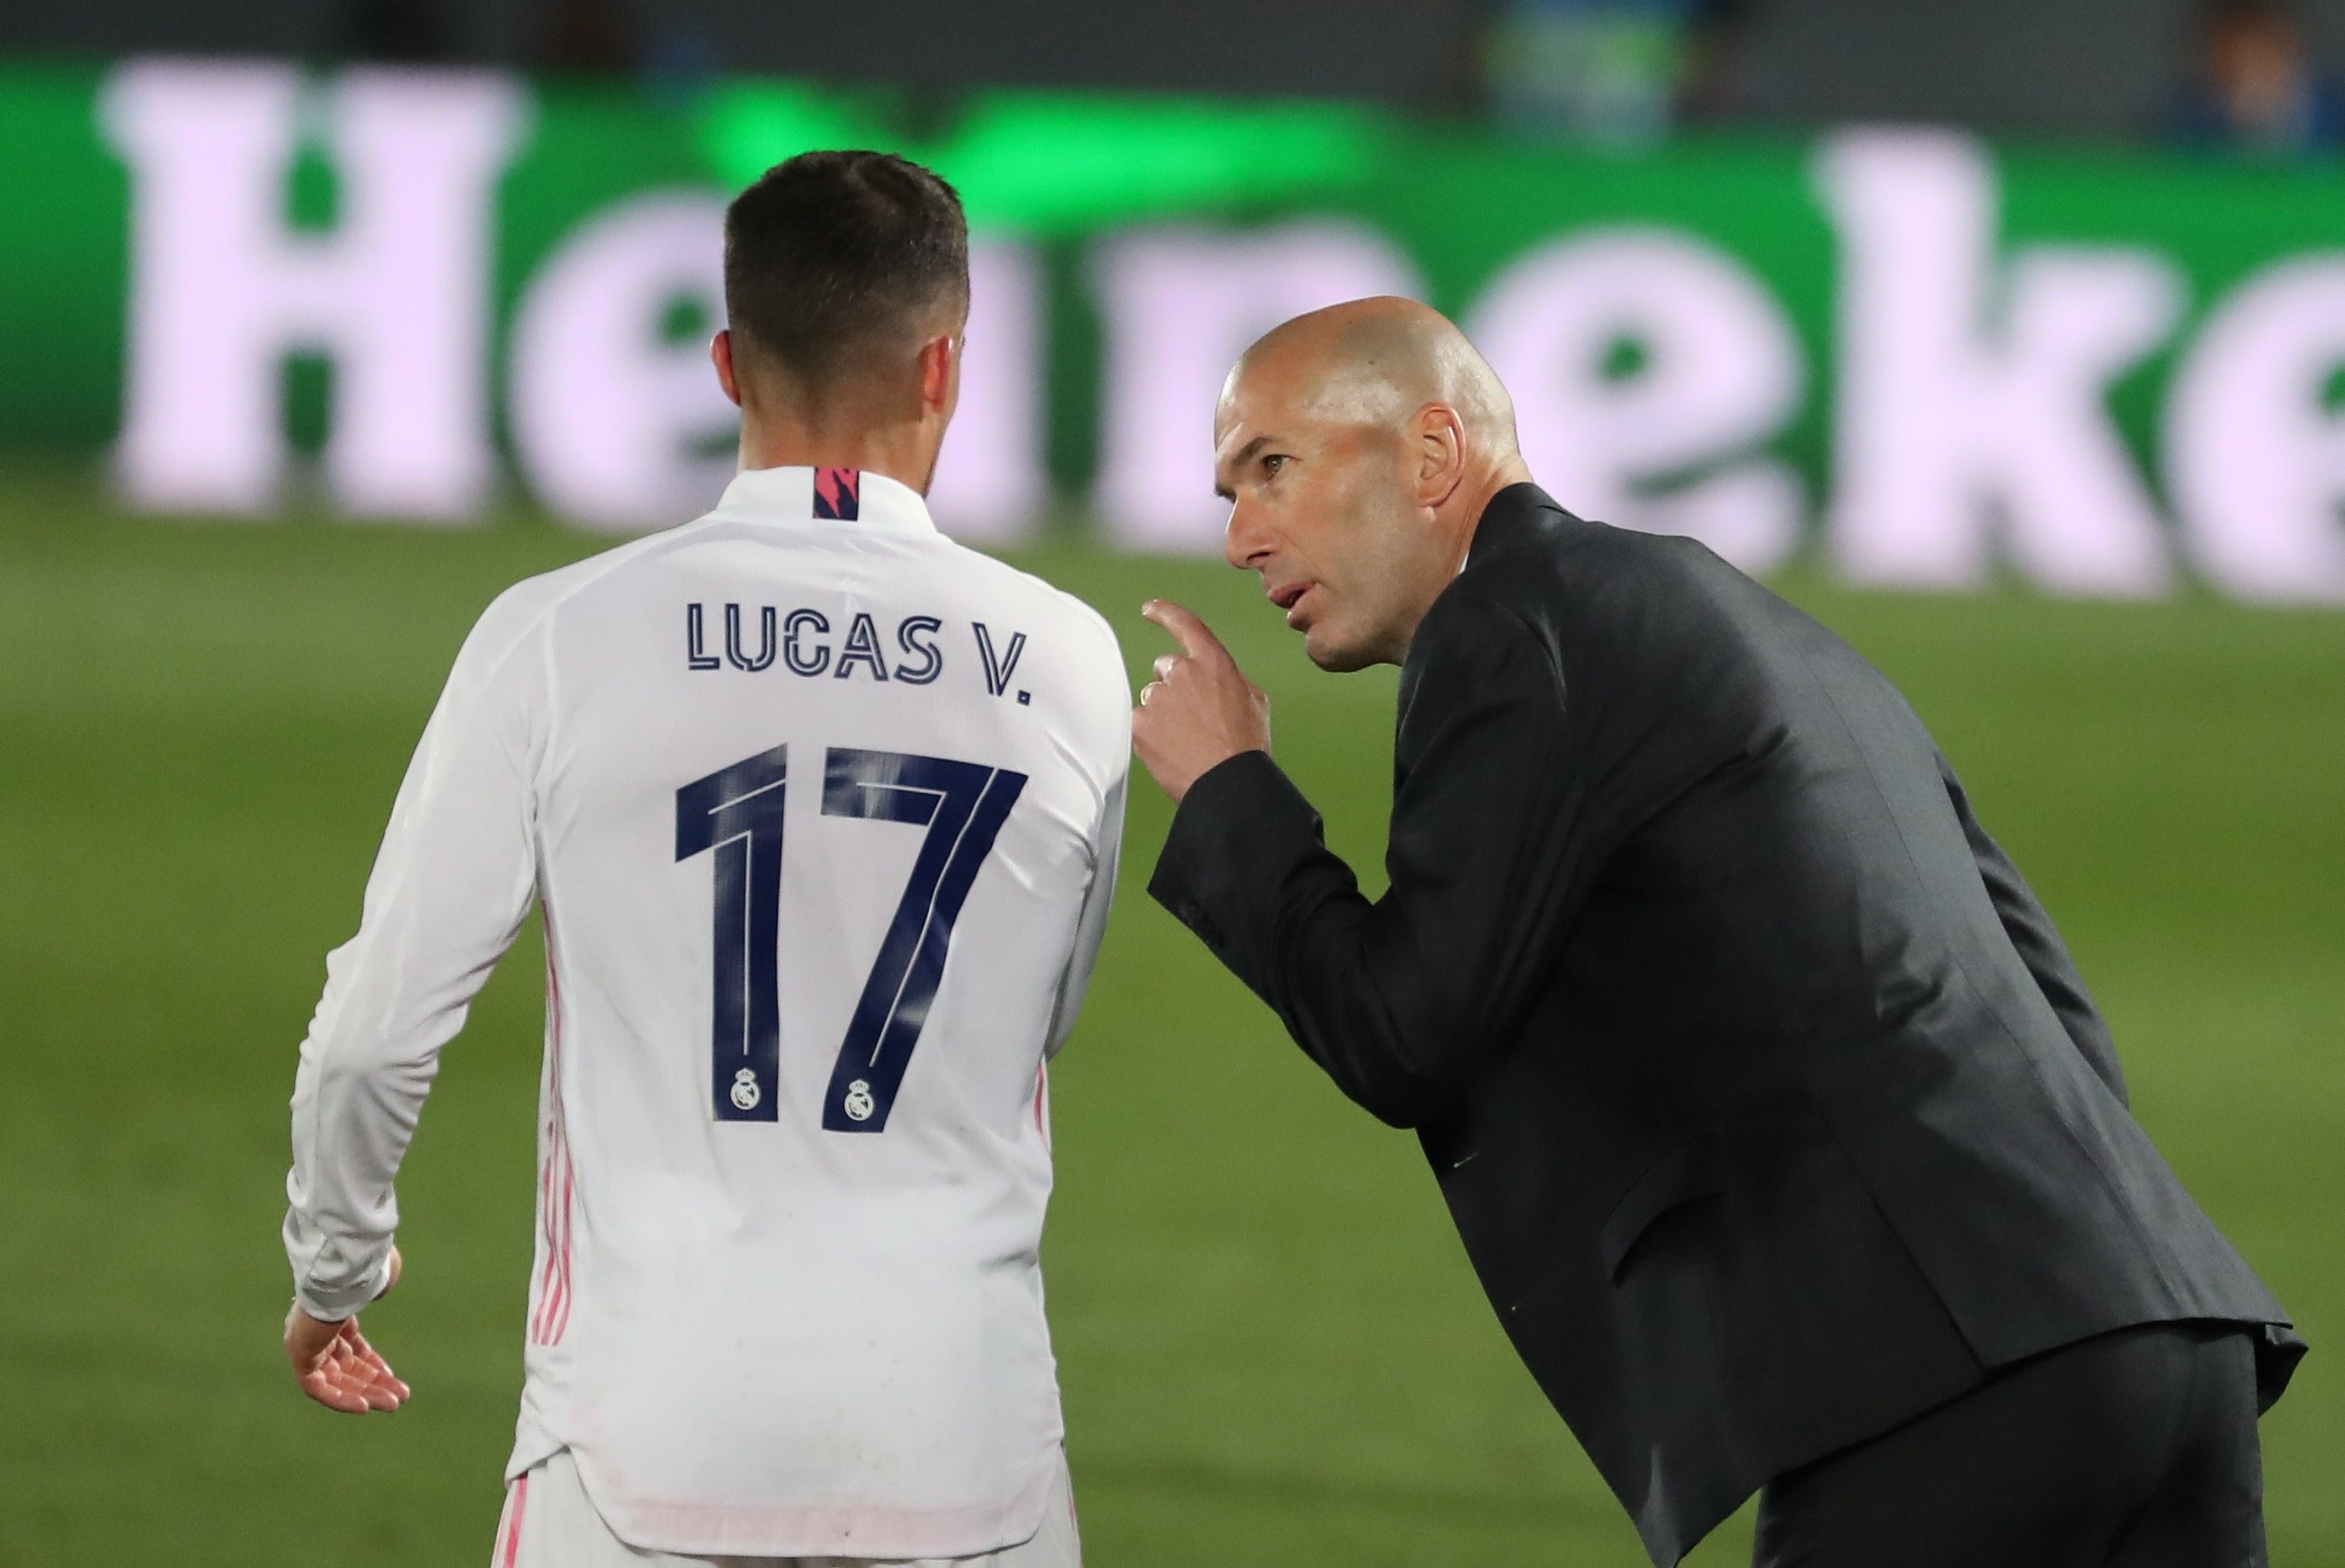 Zidane da instrucciones a Lucas Vzquez.